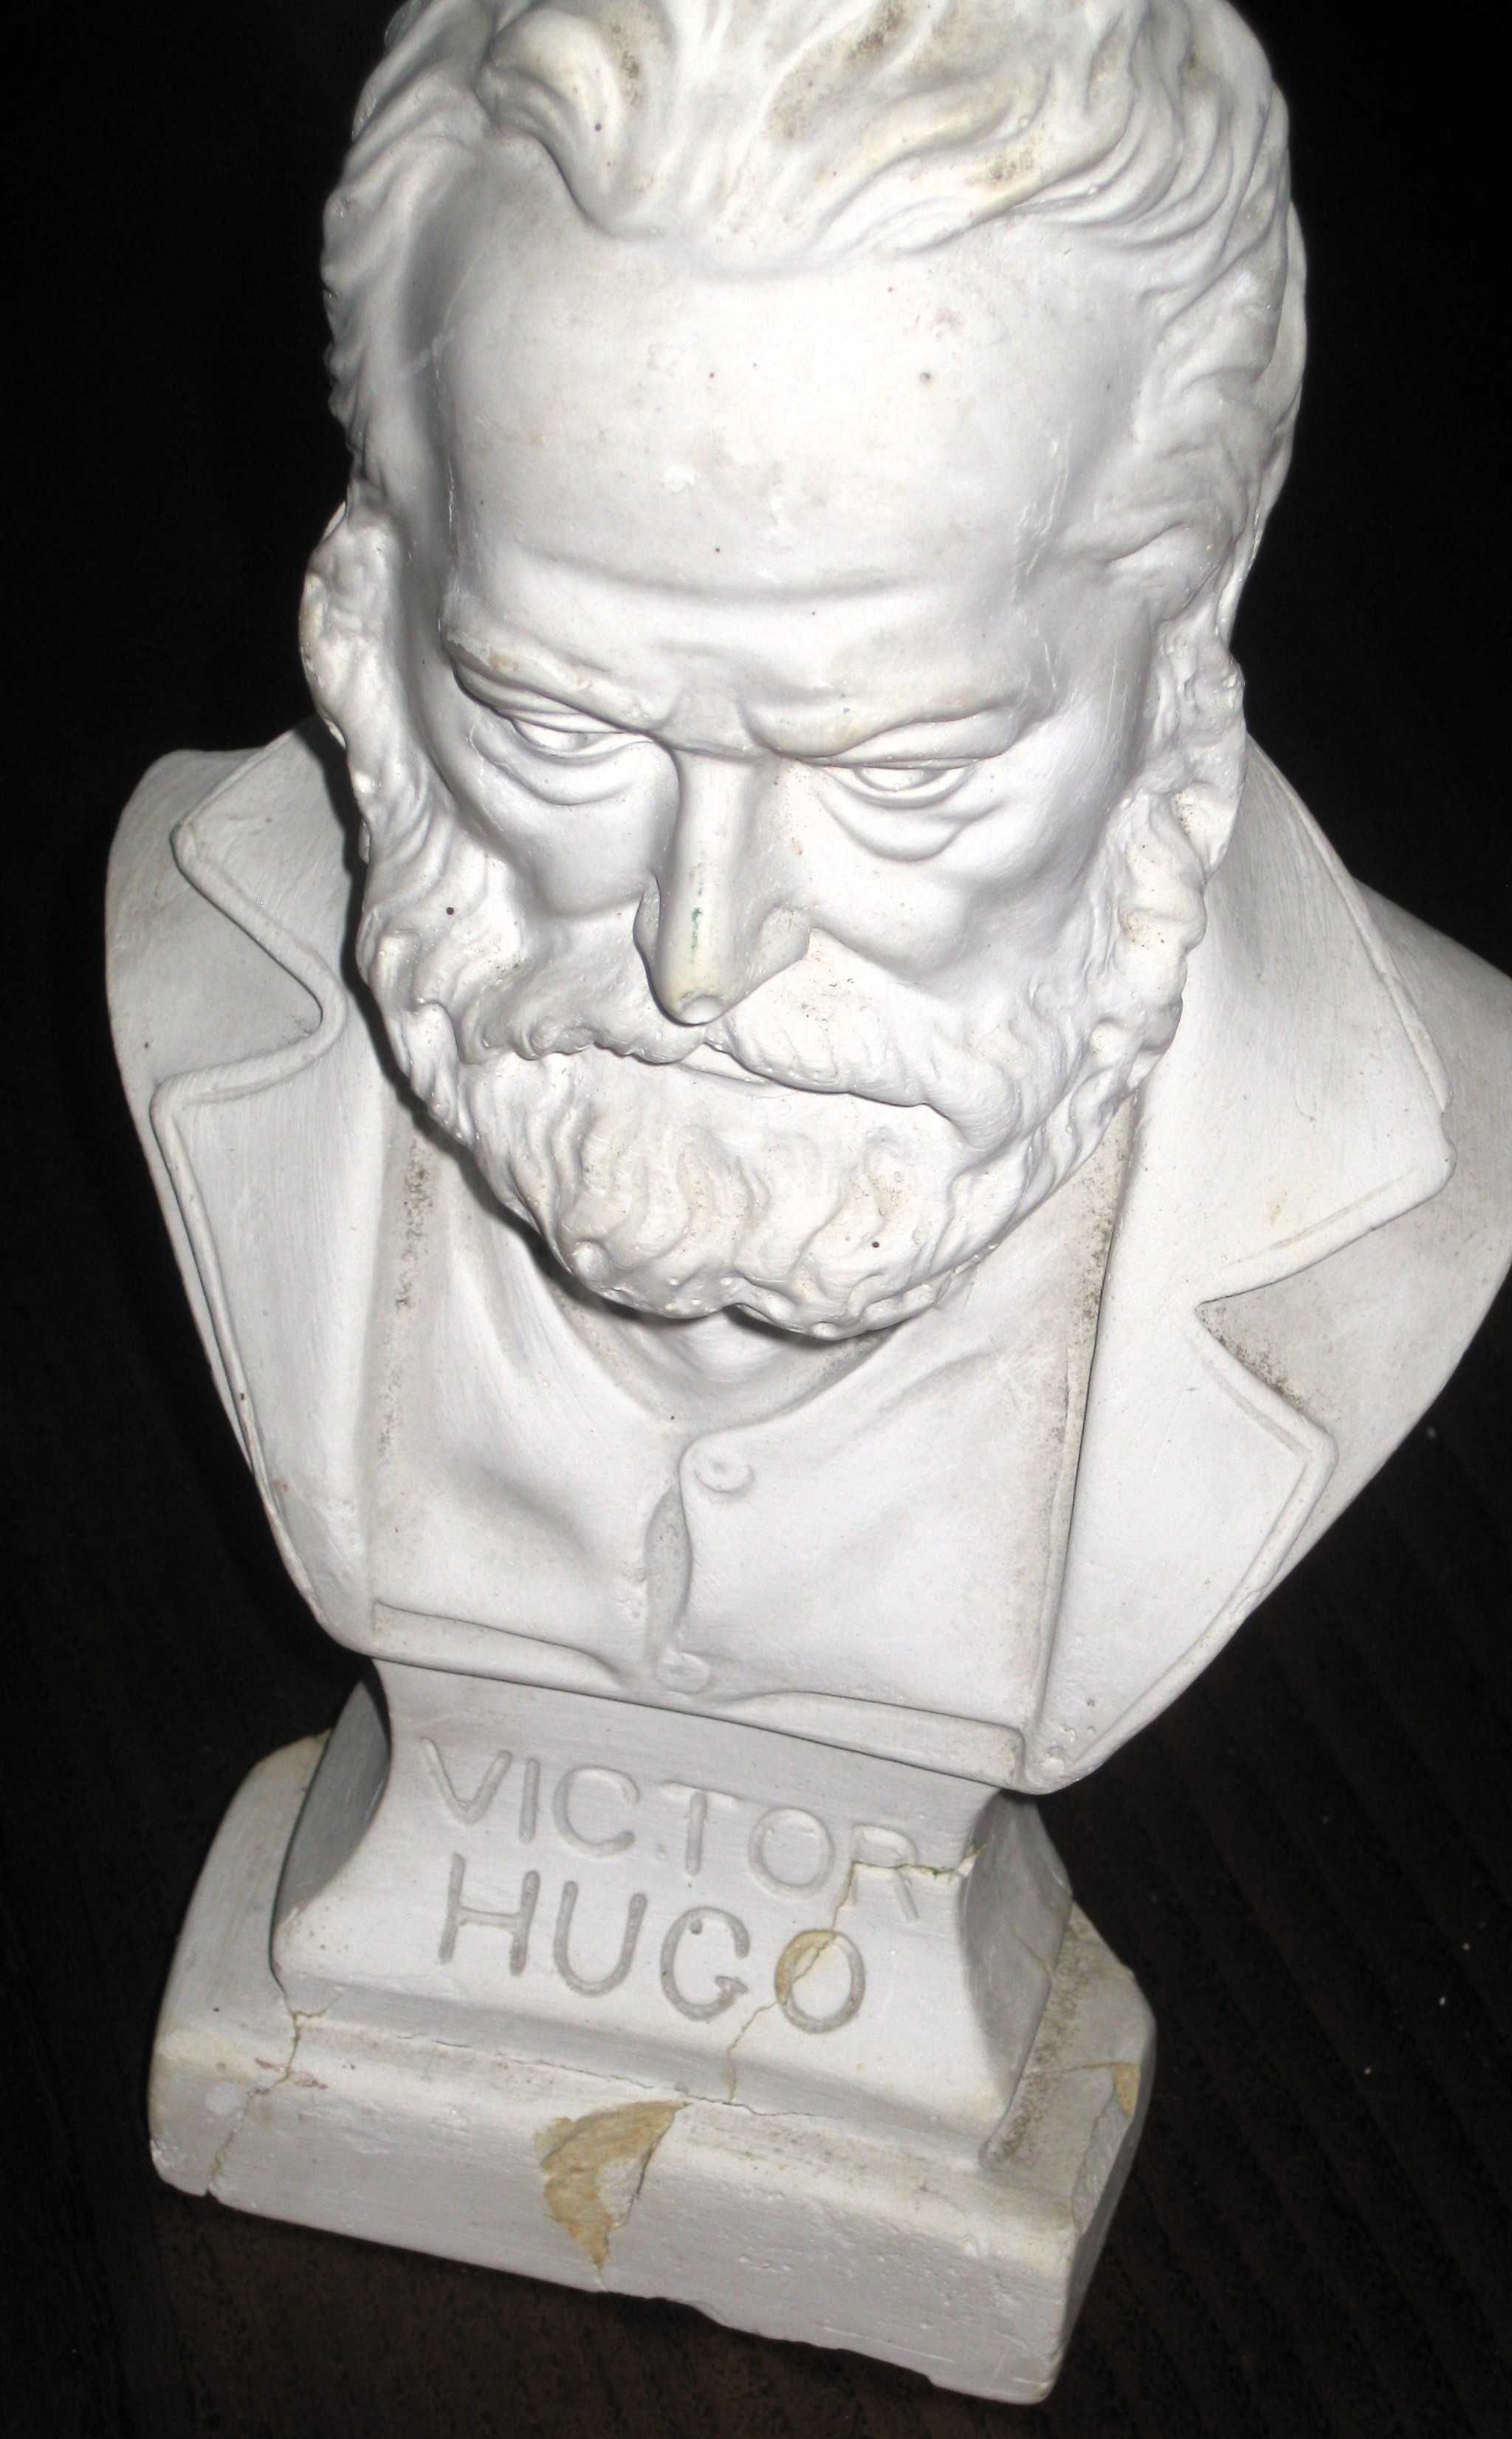 Busto de Victor Hugo, com sinais de uso: